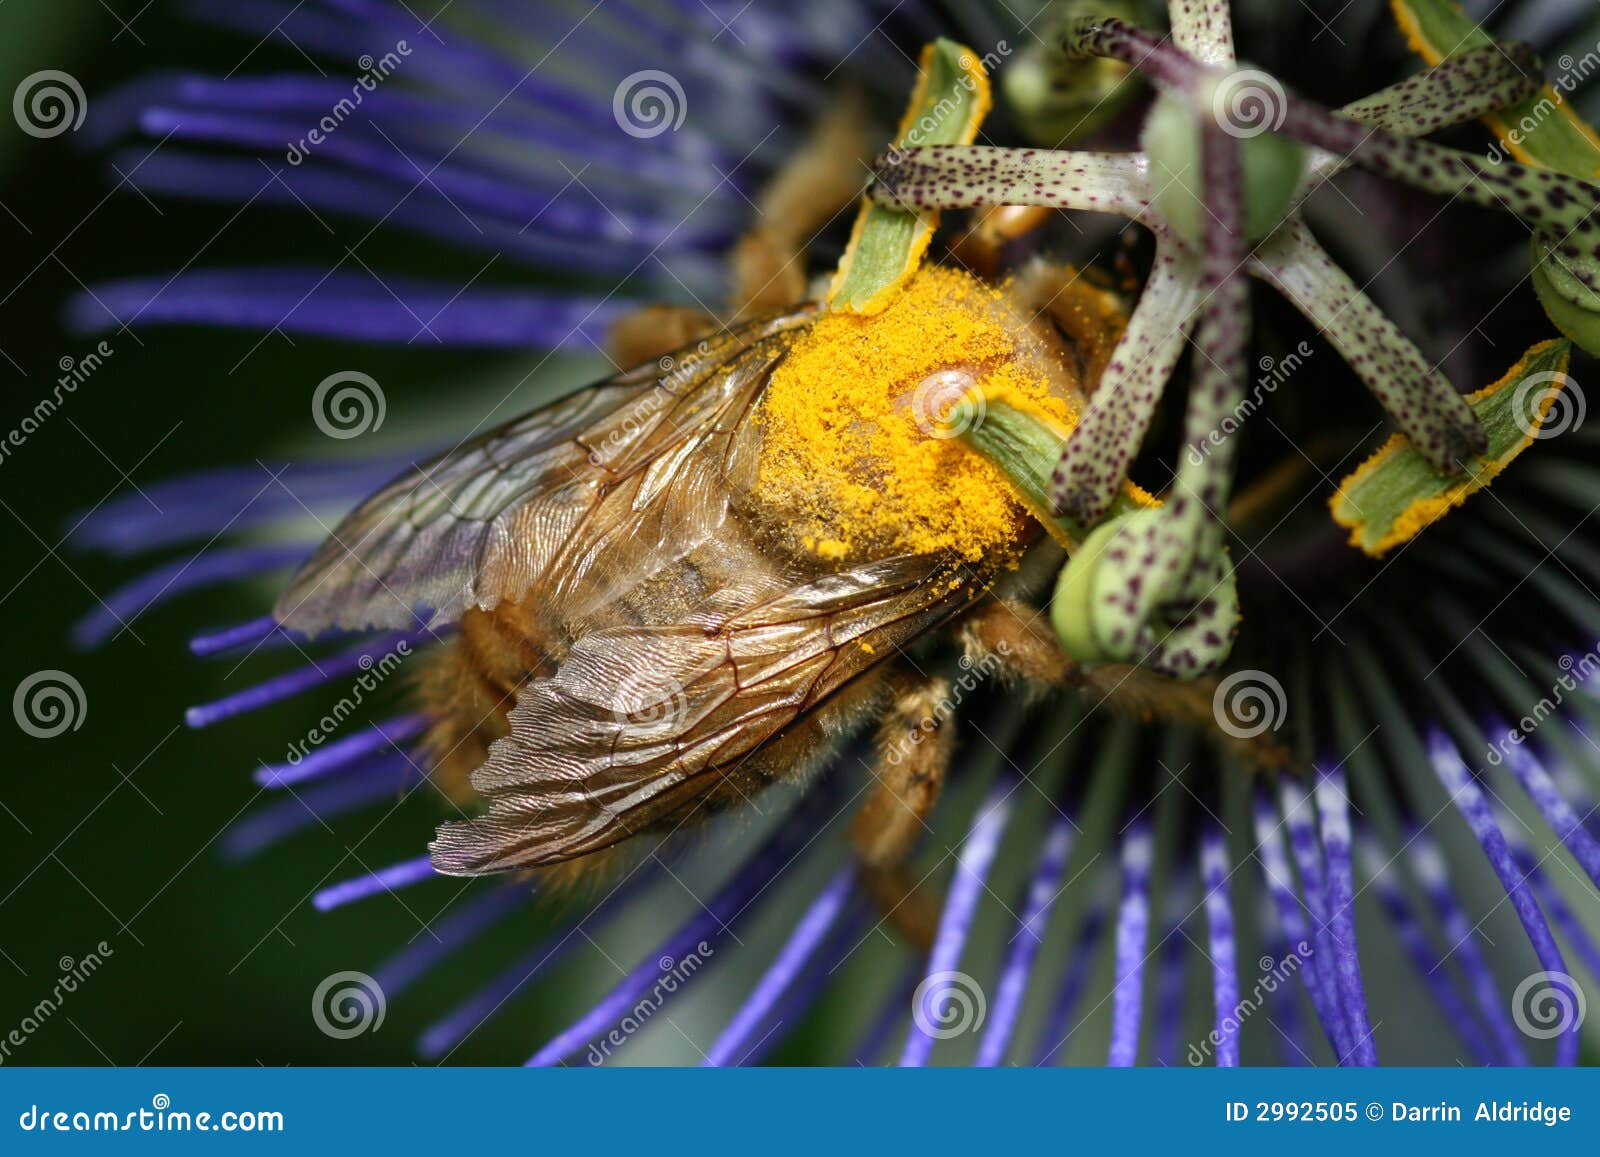 bumblebee drinking nectar